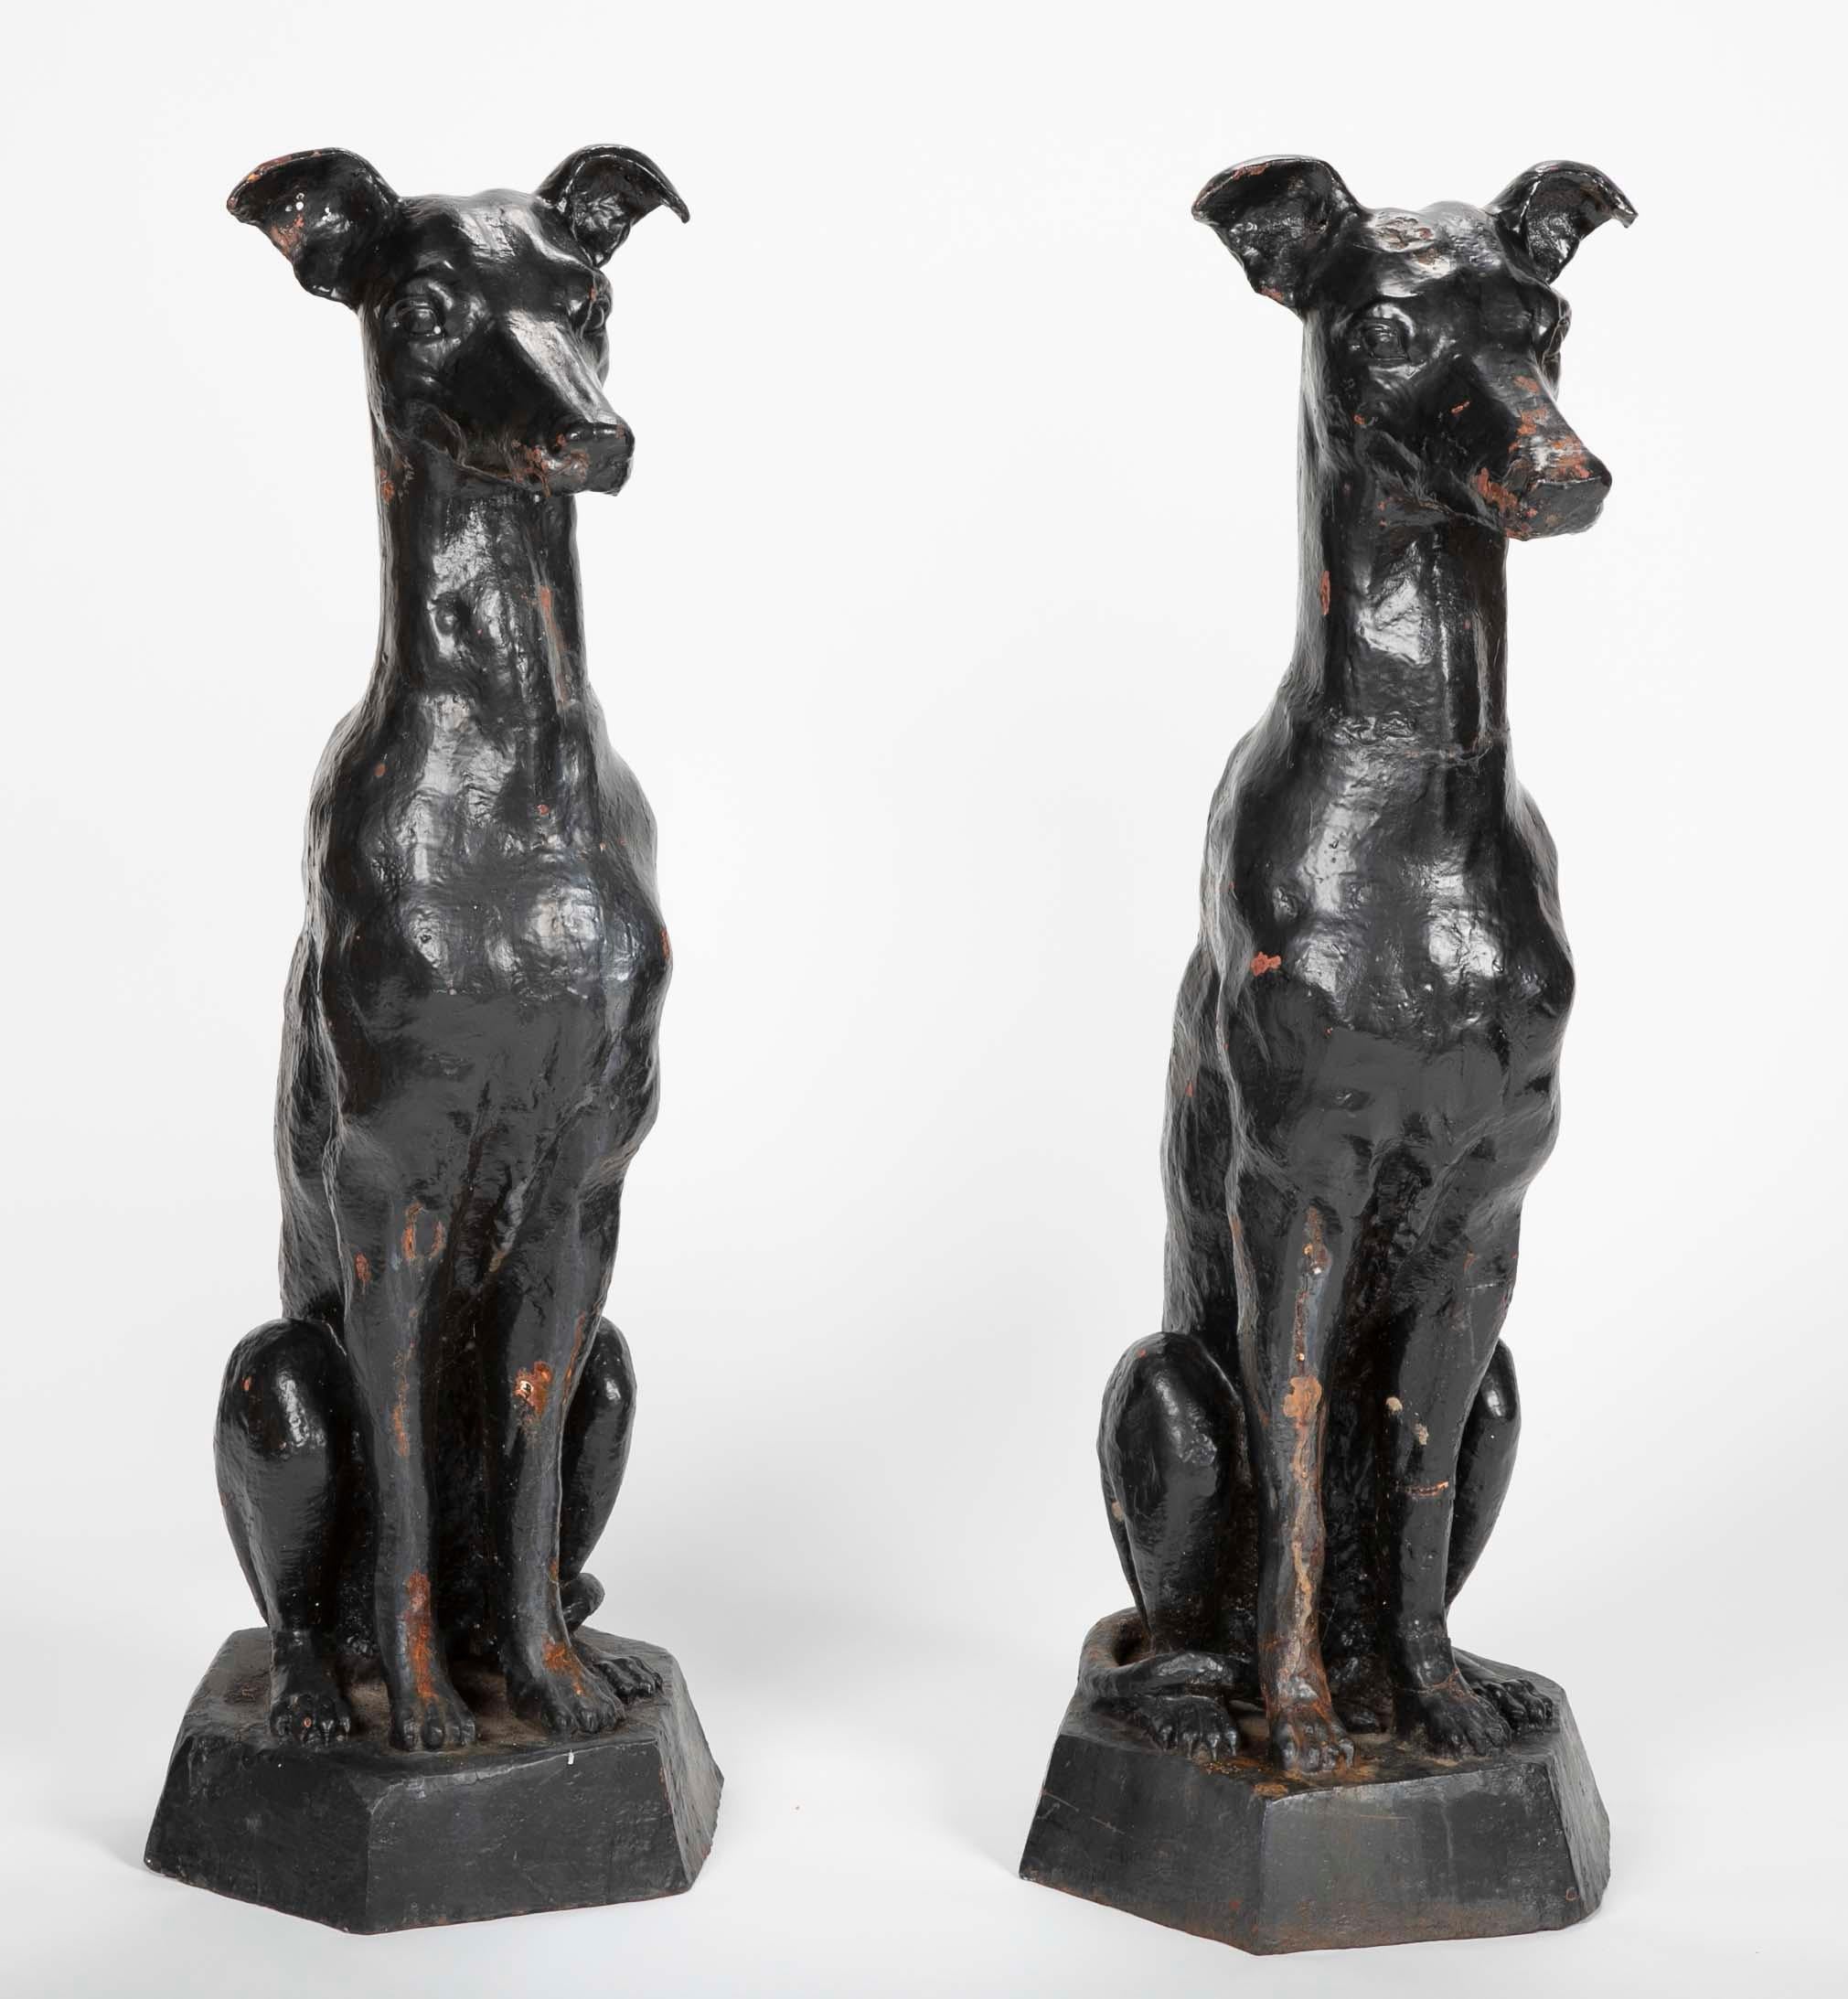 Pair of antique cast iron greyhound sculptures.